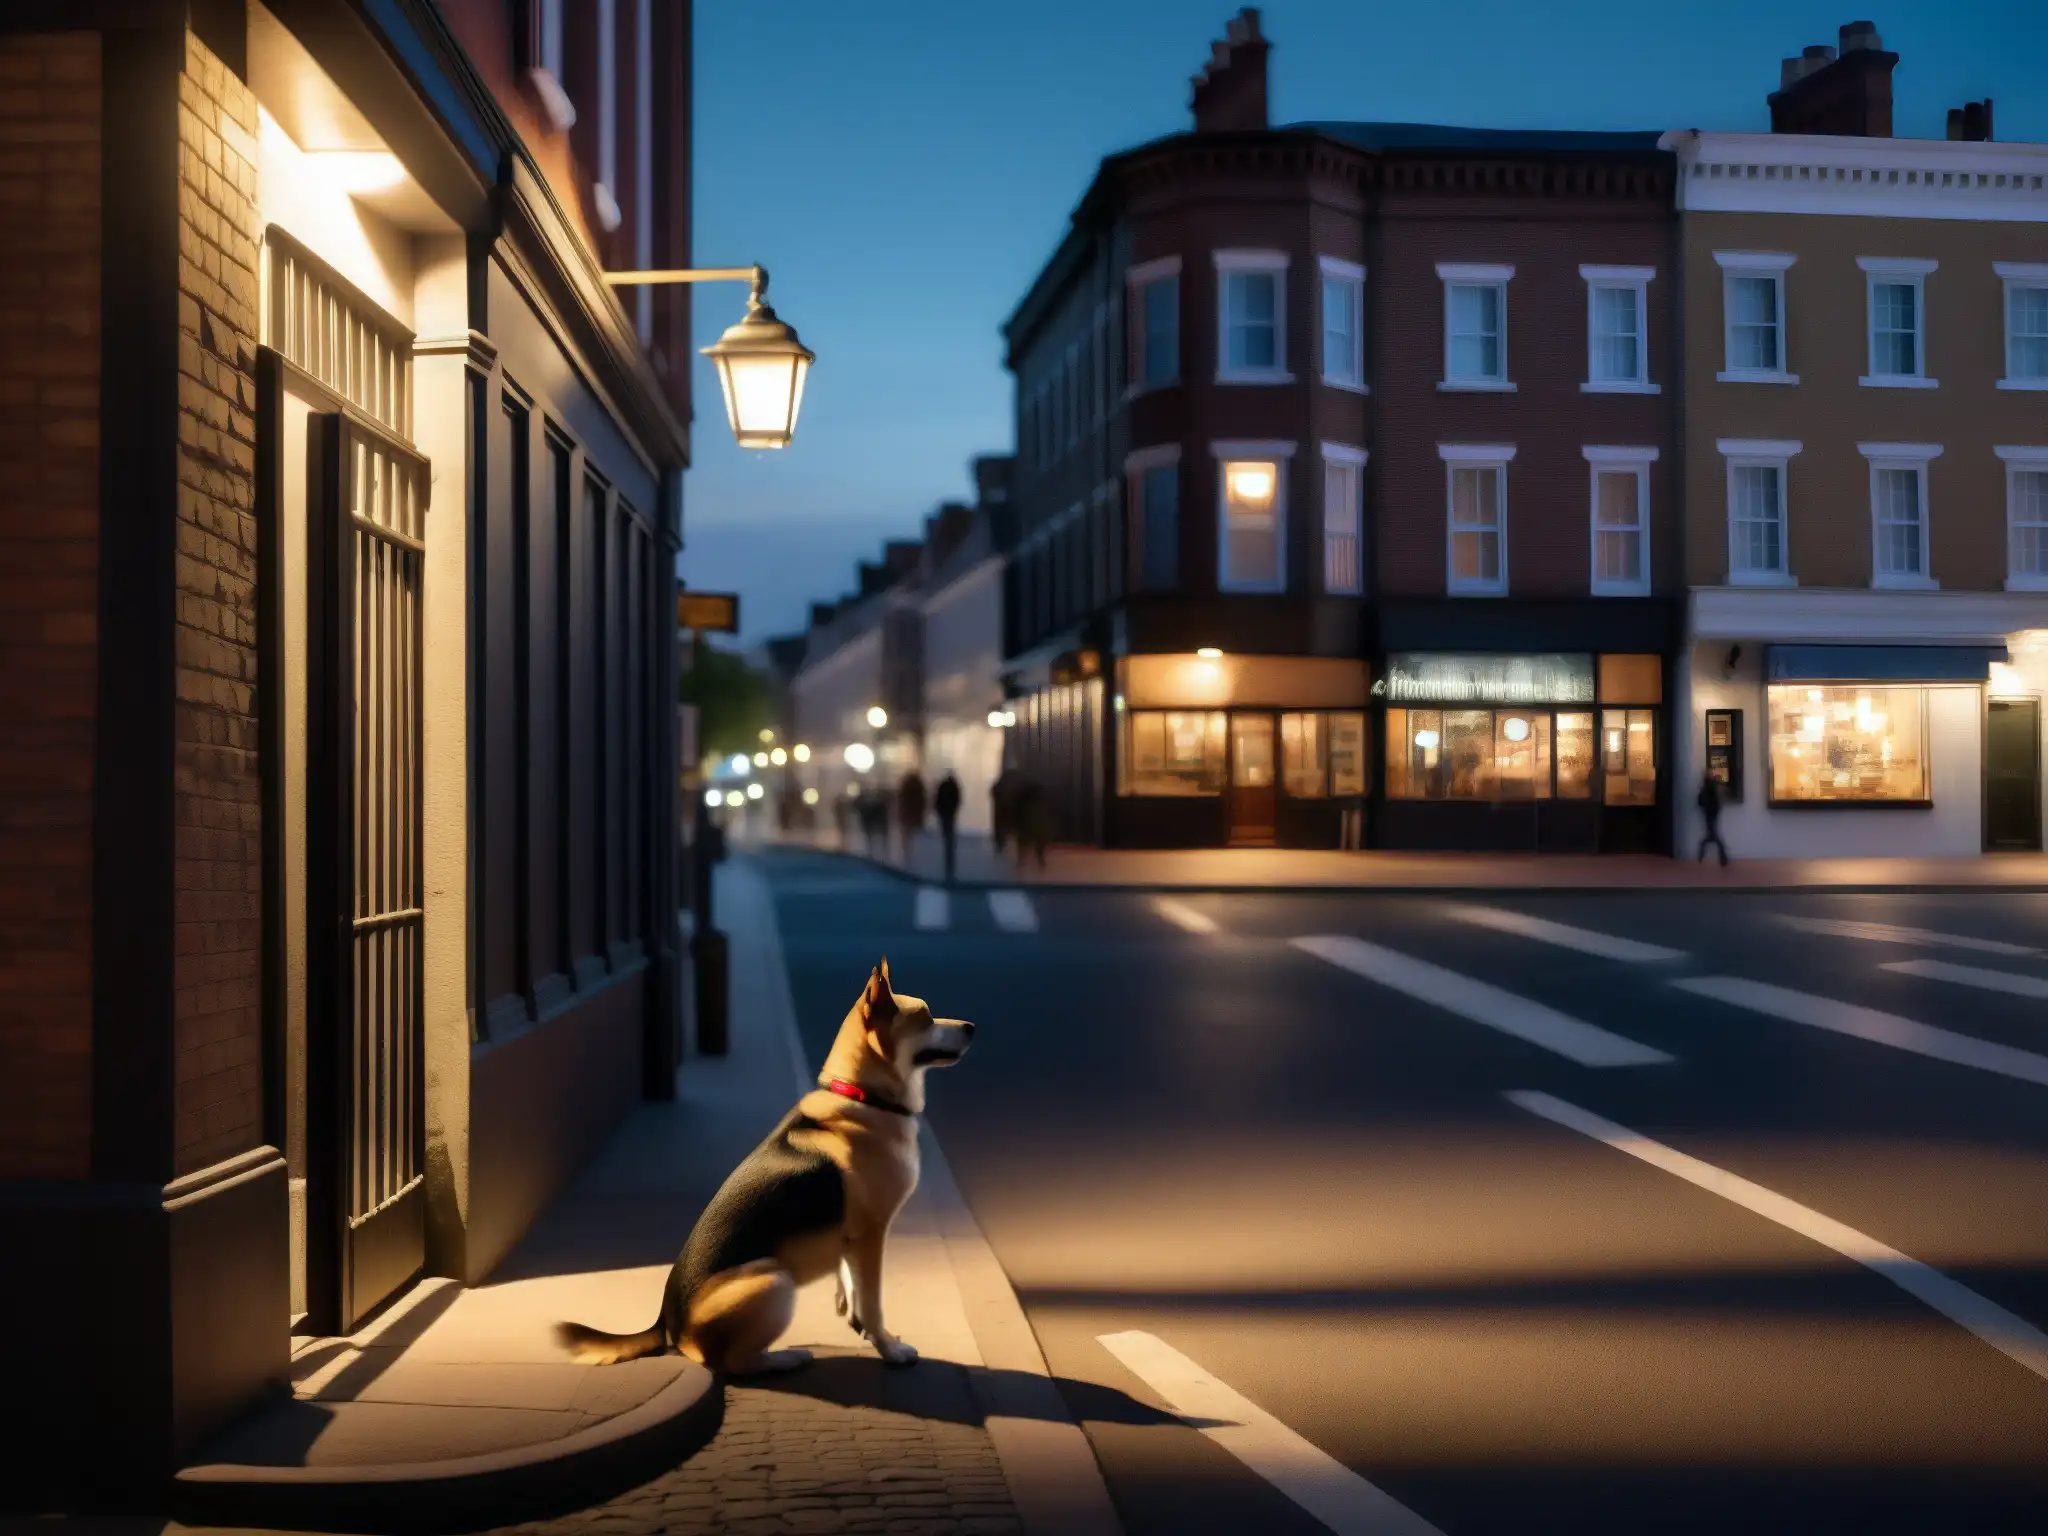 Enigmática esquina nocturna con un jinmenken, perro de cara humana, paseando